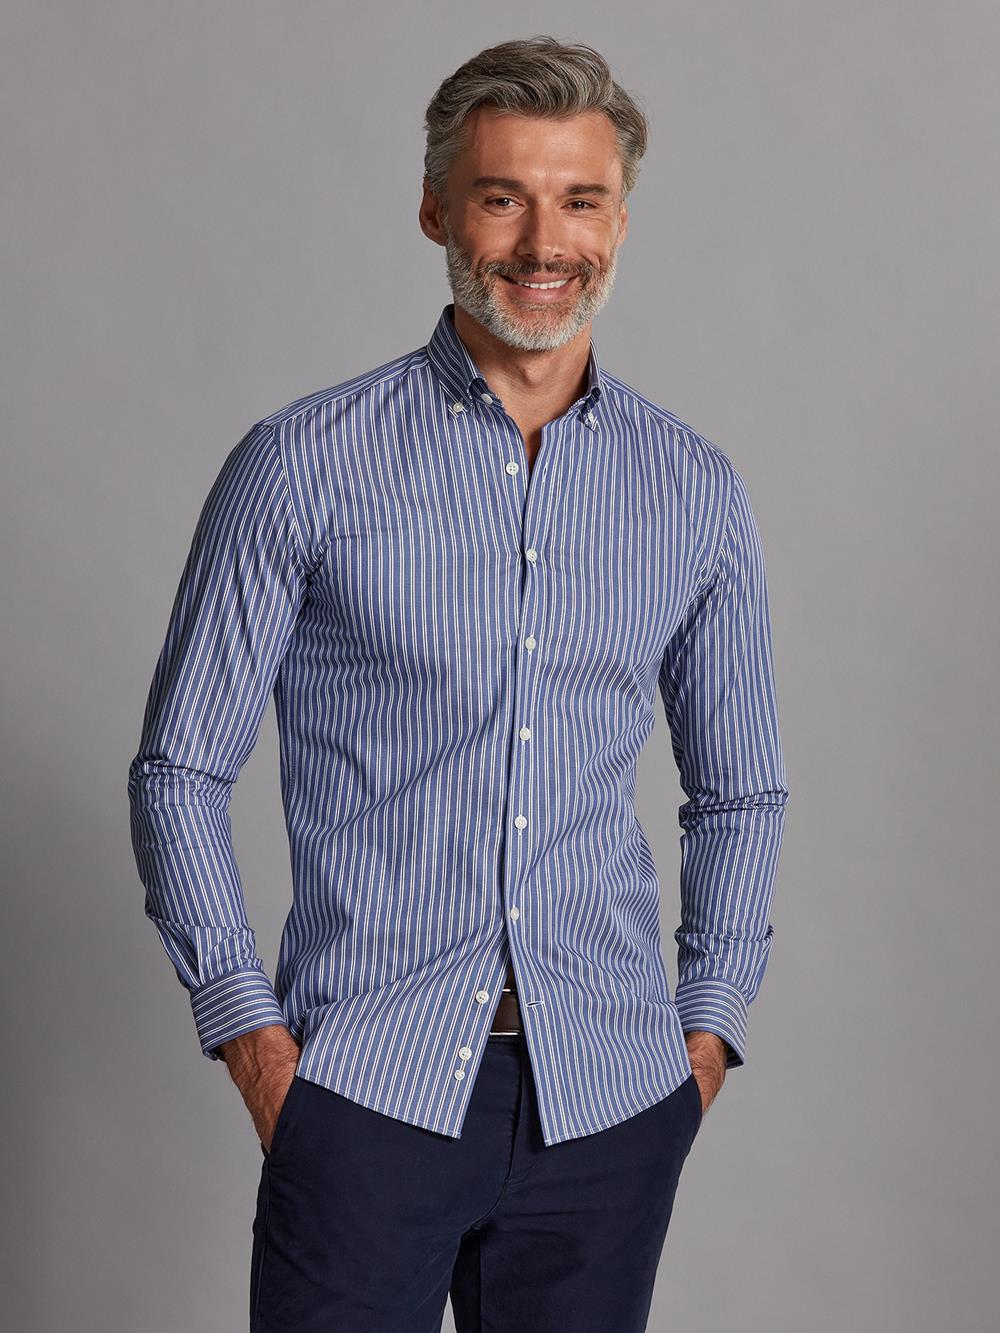 Maxwel fit Shirt - Button Down Collar